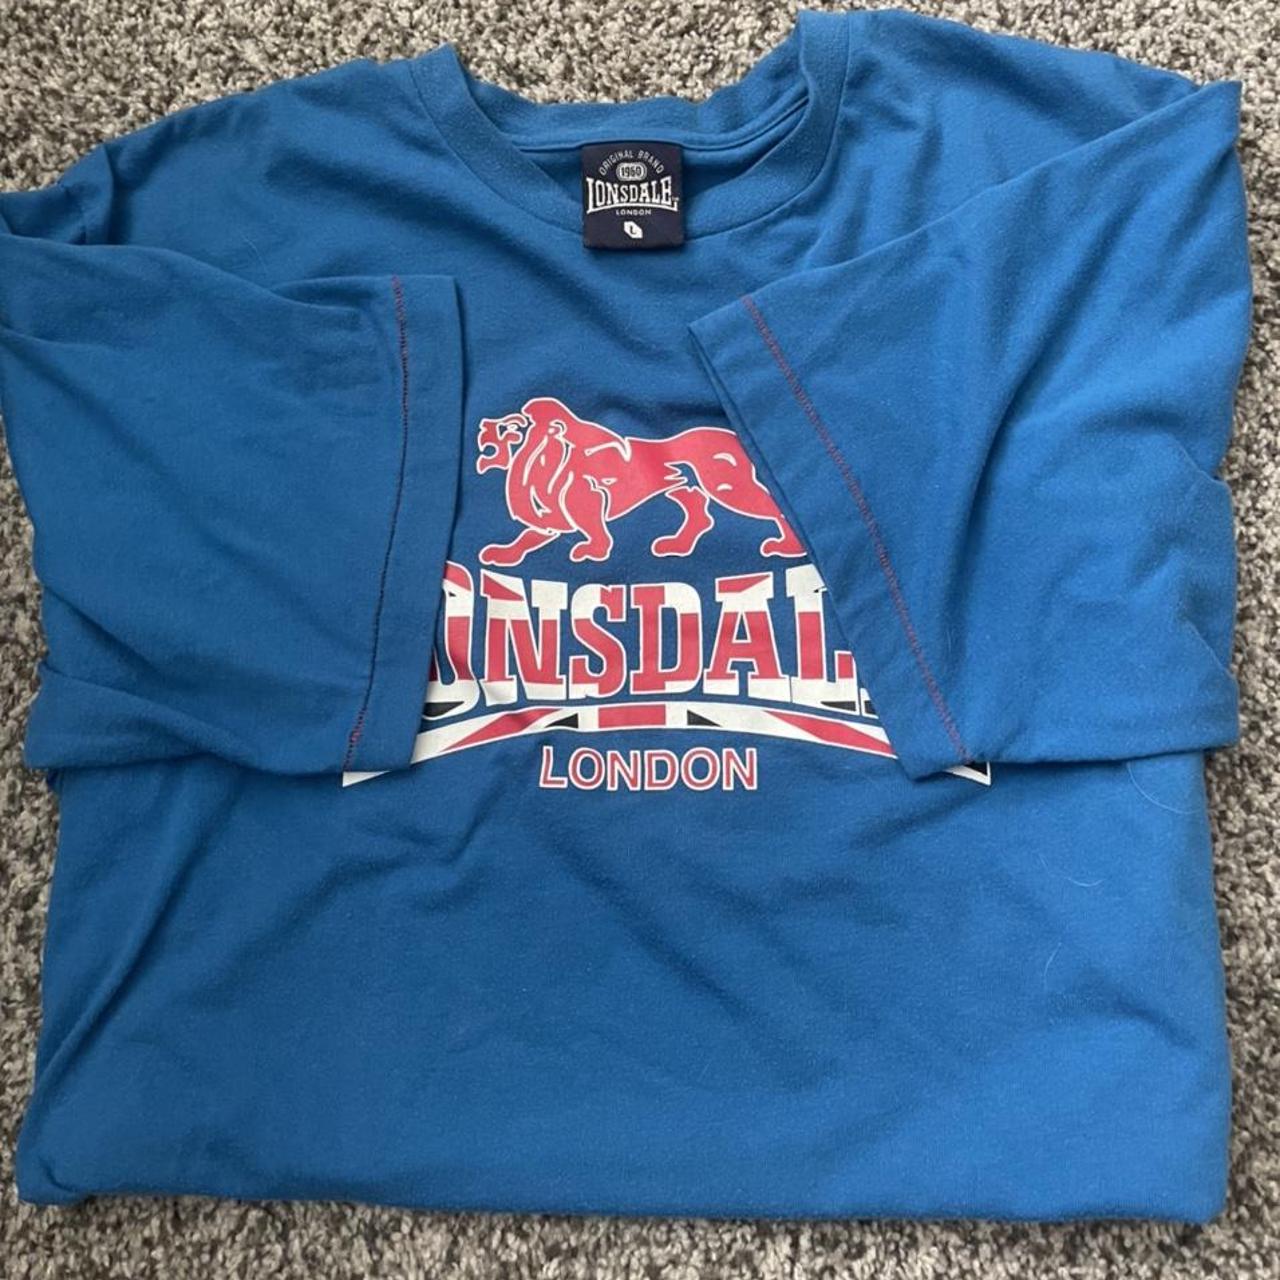 Product Image 2 - Vintage Lonsdale London t-shirt 
single